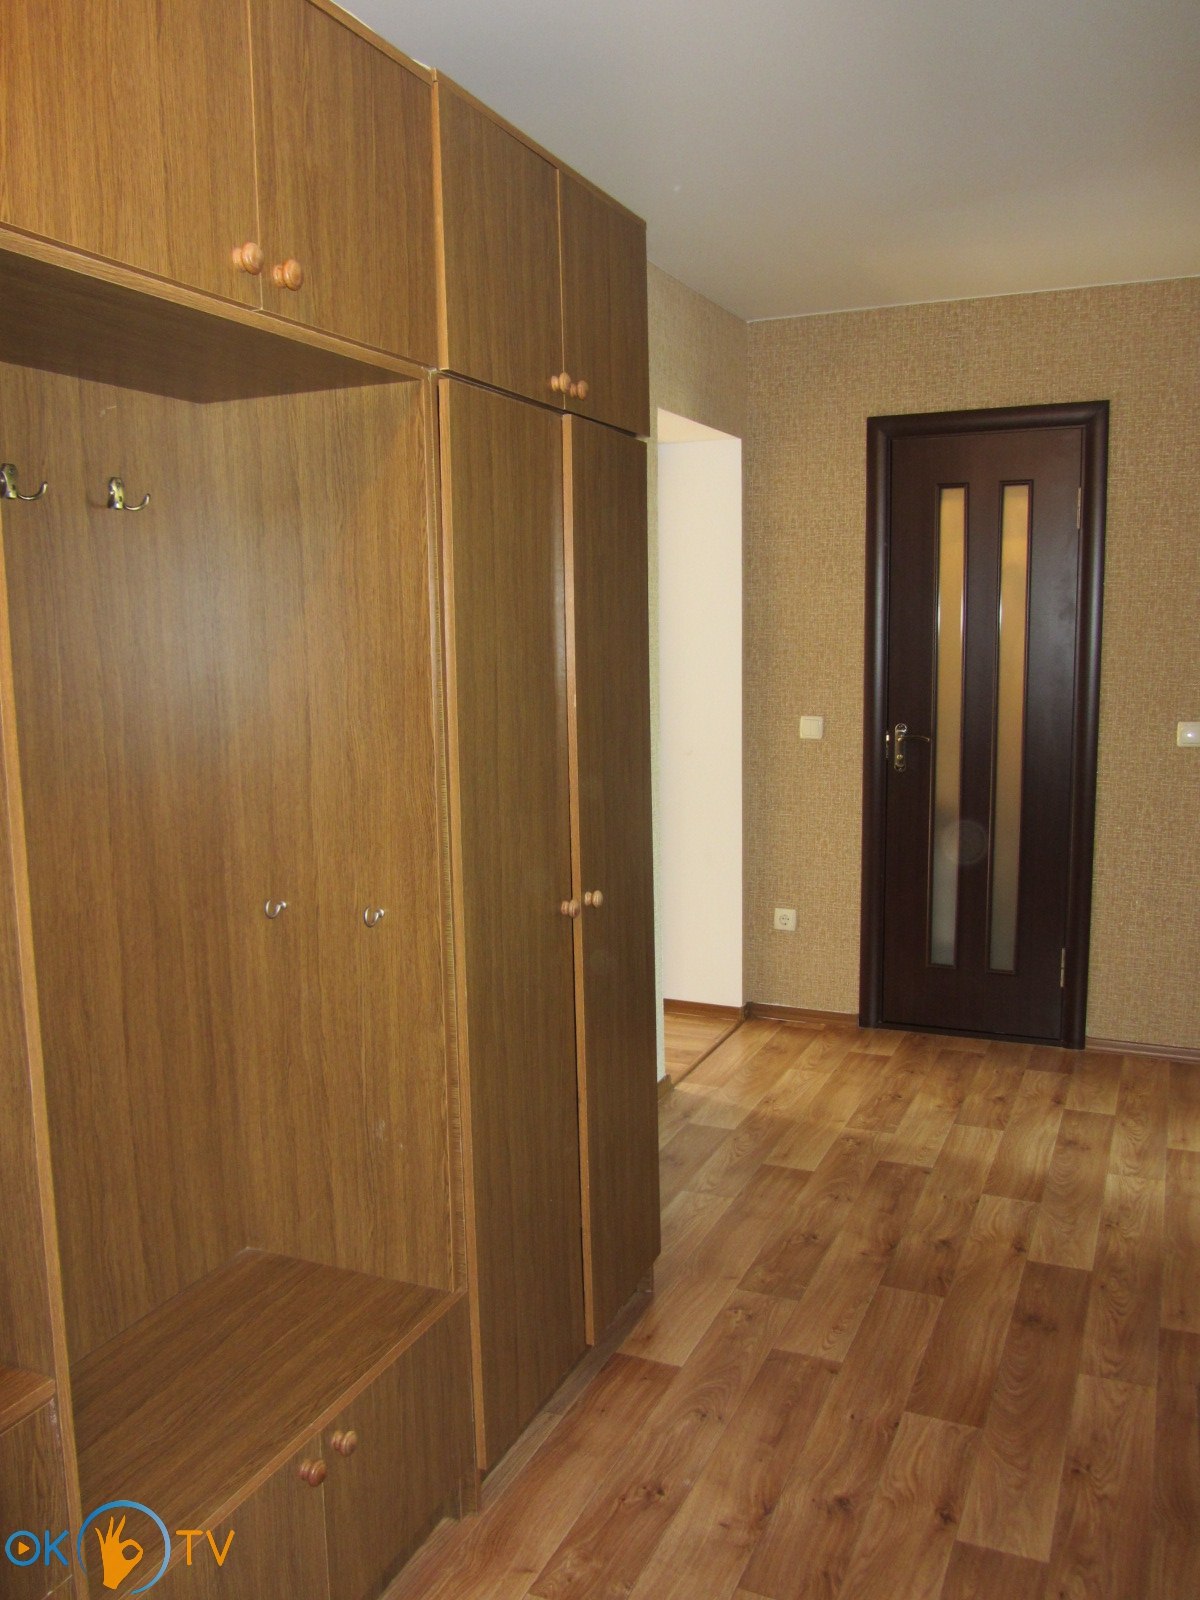 Квартира в новострое возле стадиона «Локомотив» фото 7